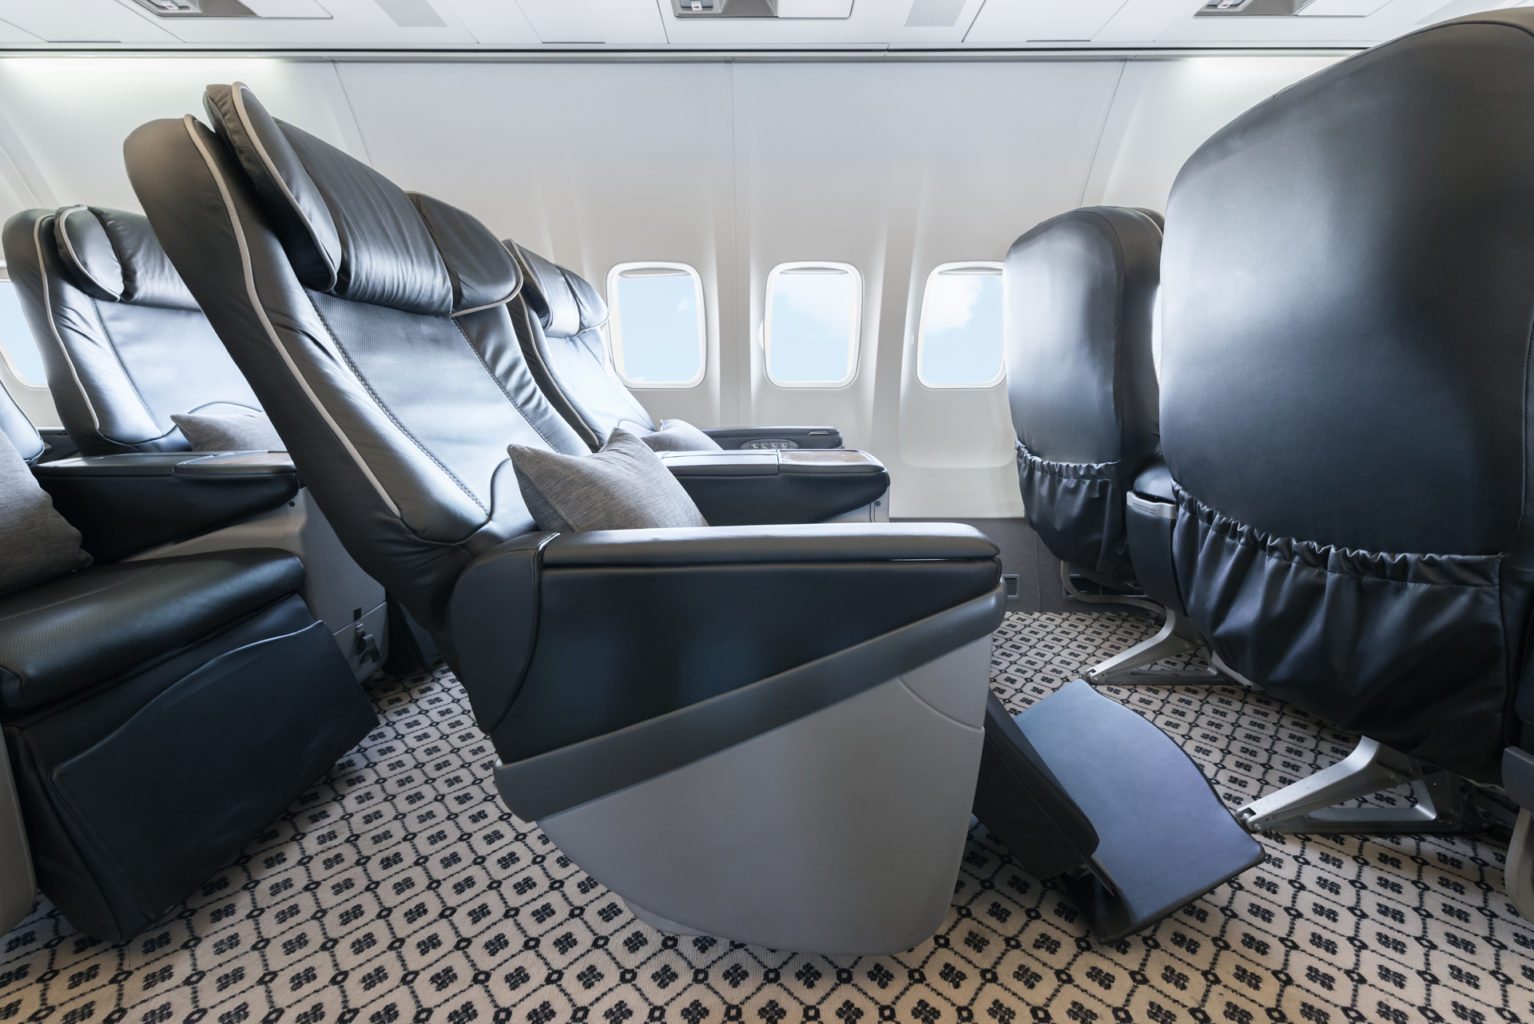 Aircraft seats pre-season travel